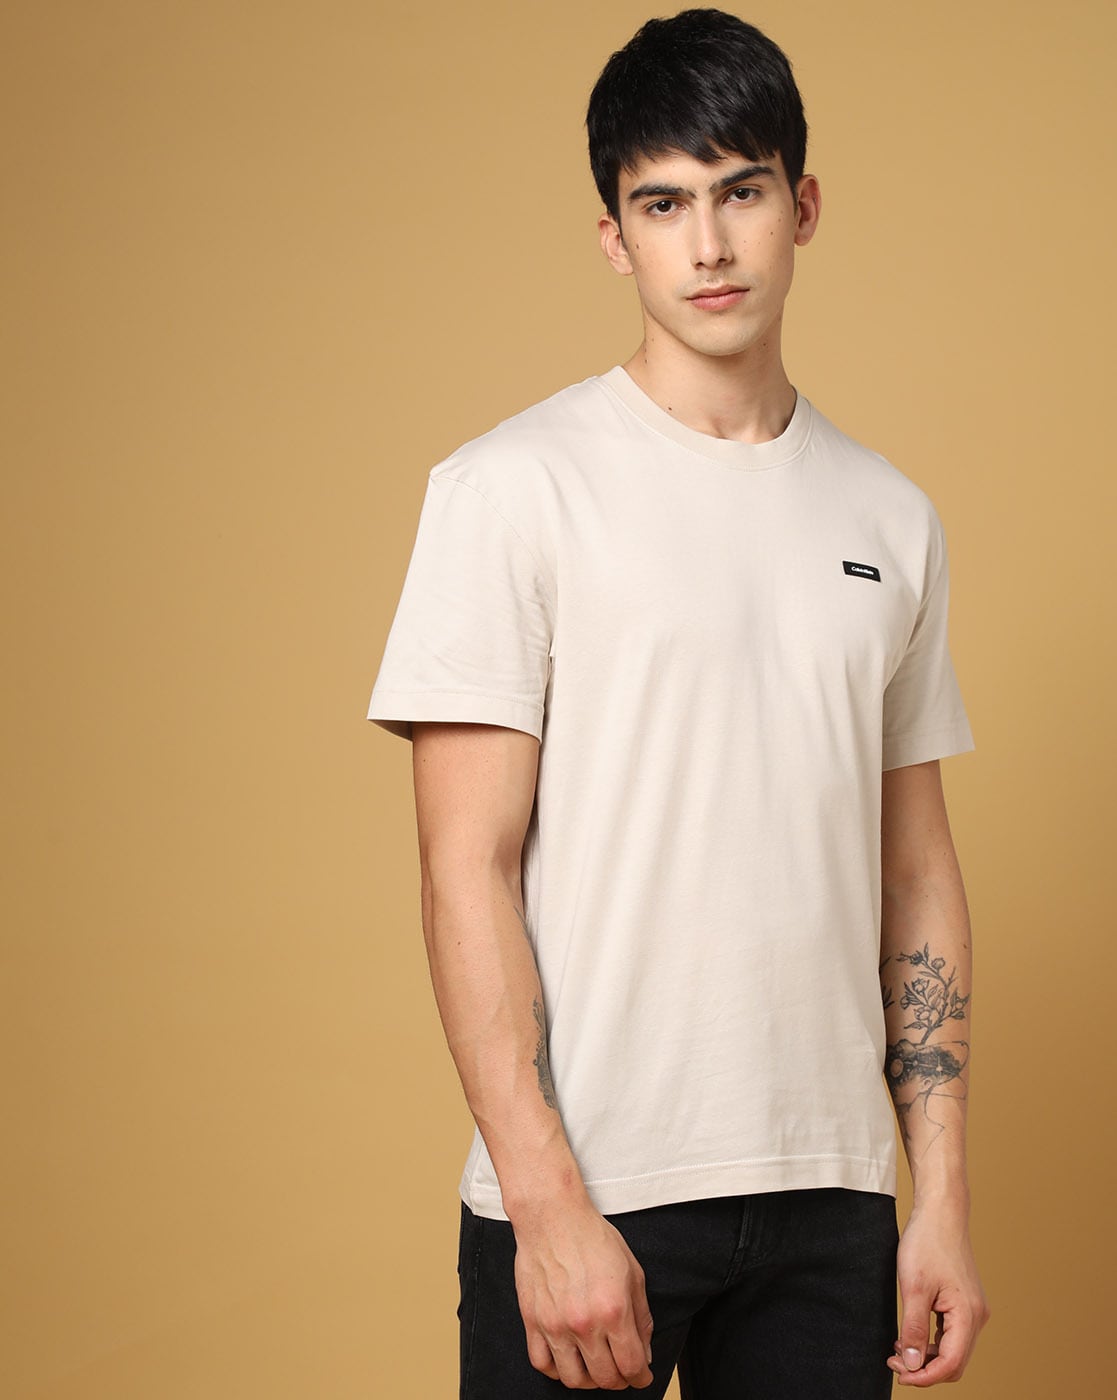 Buy Beige Tshirts for Men Calvin Online Klein by Jeans